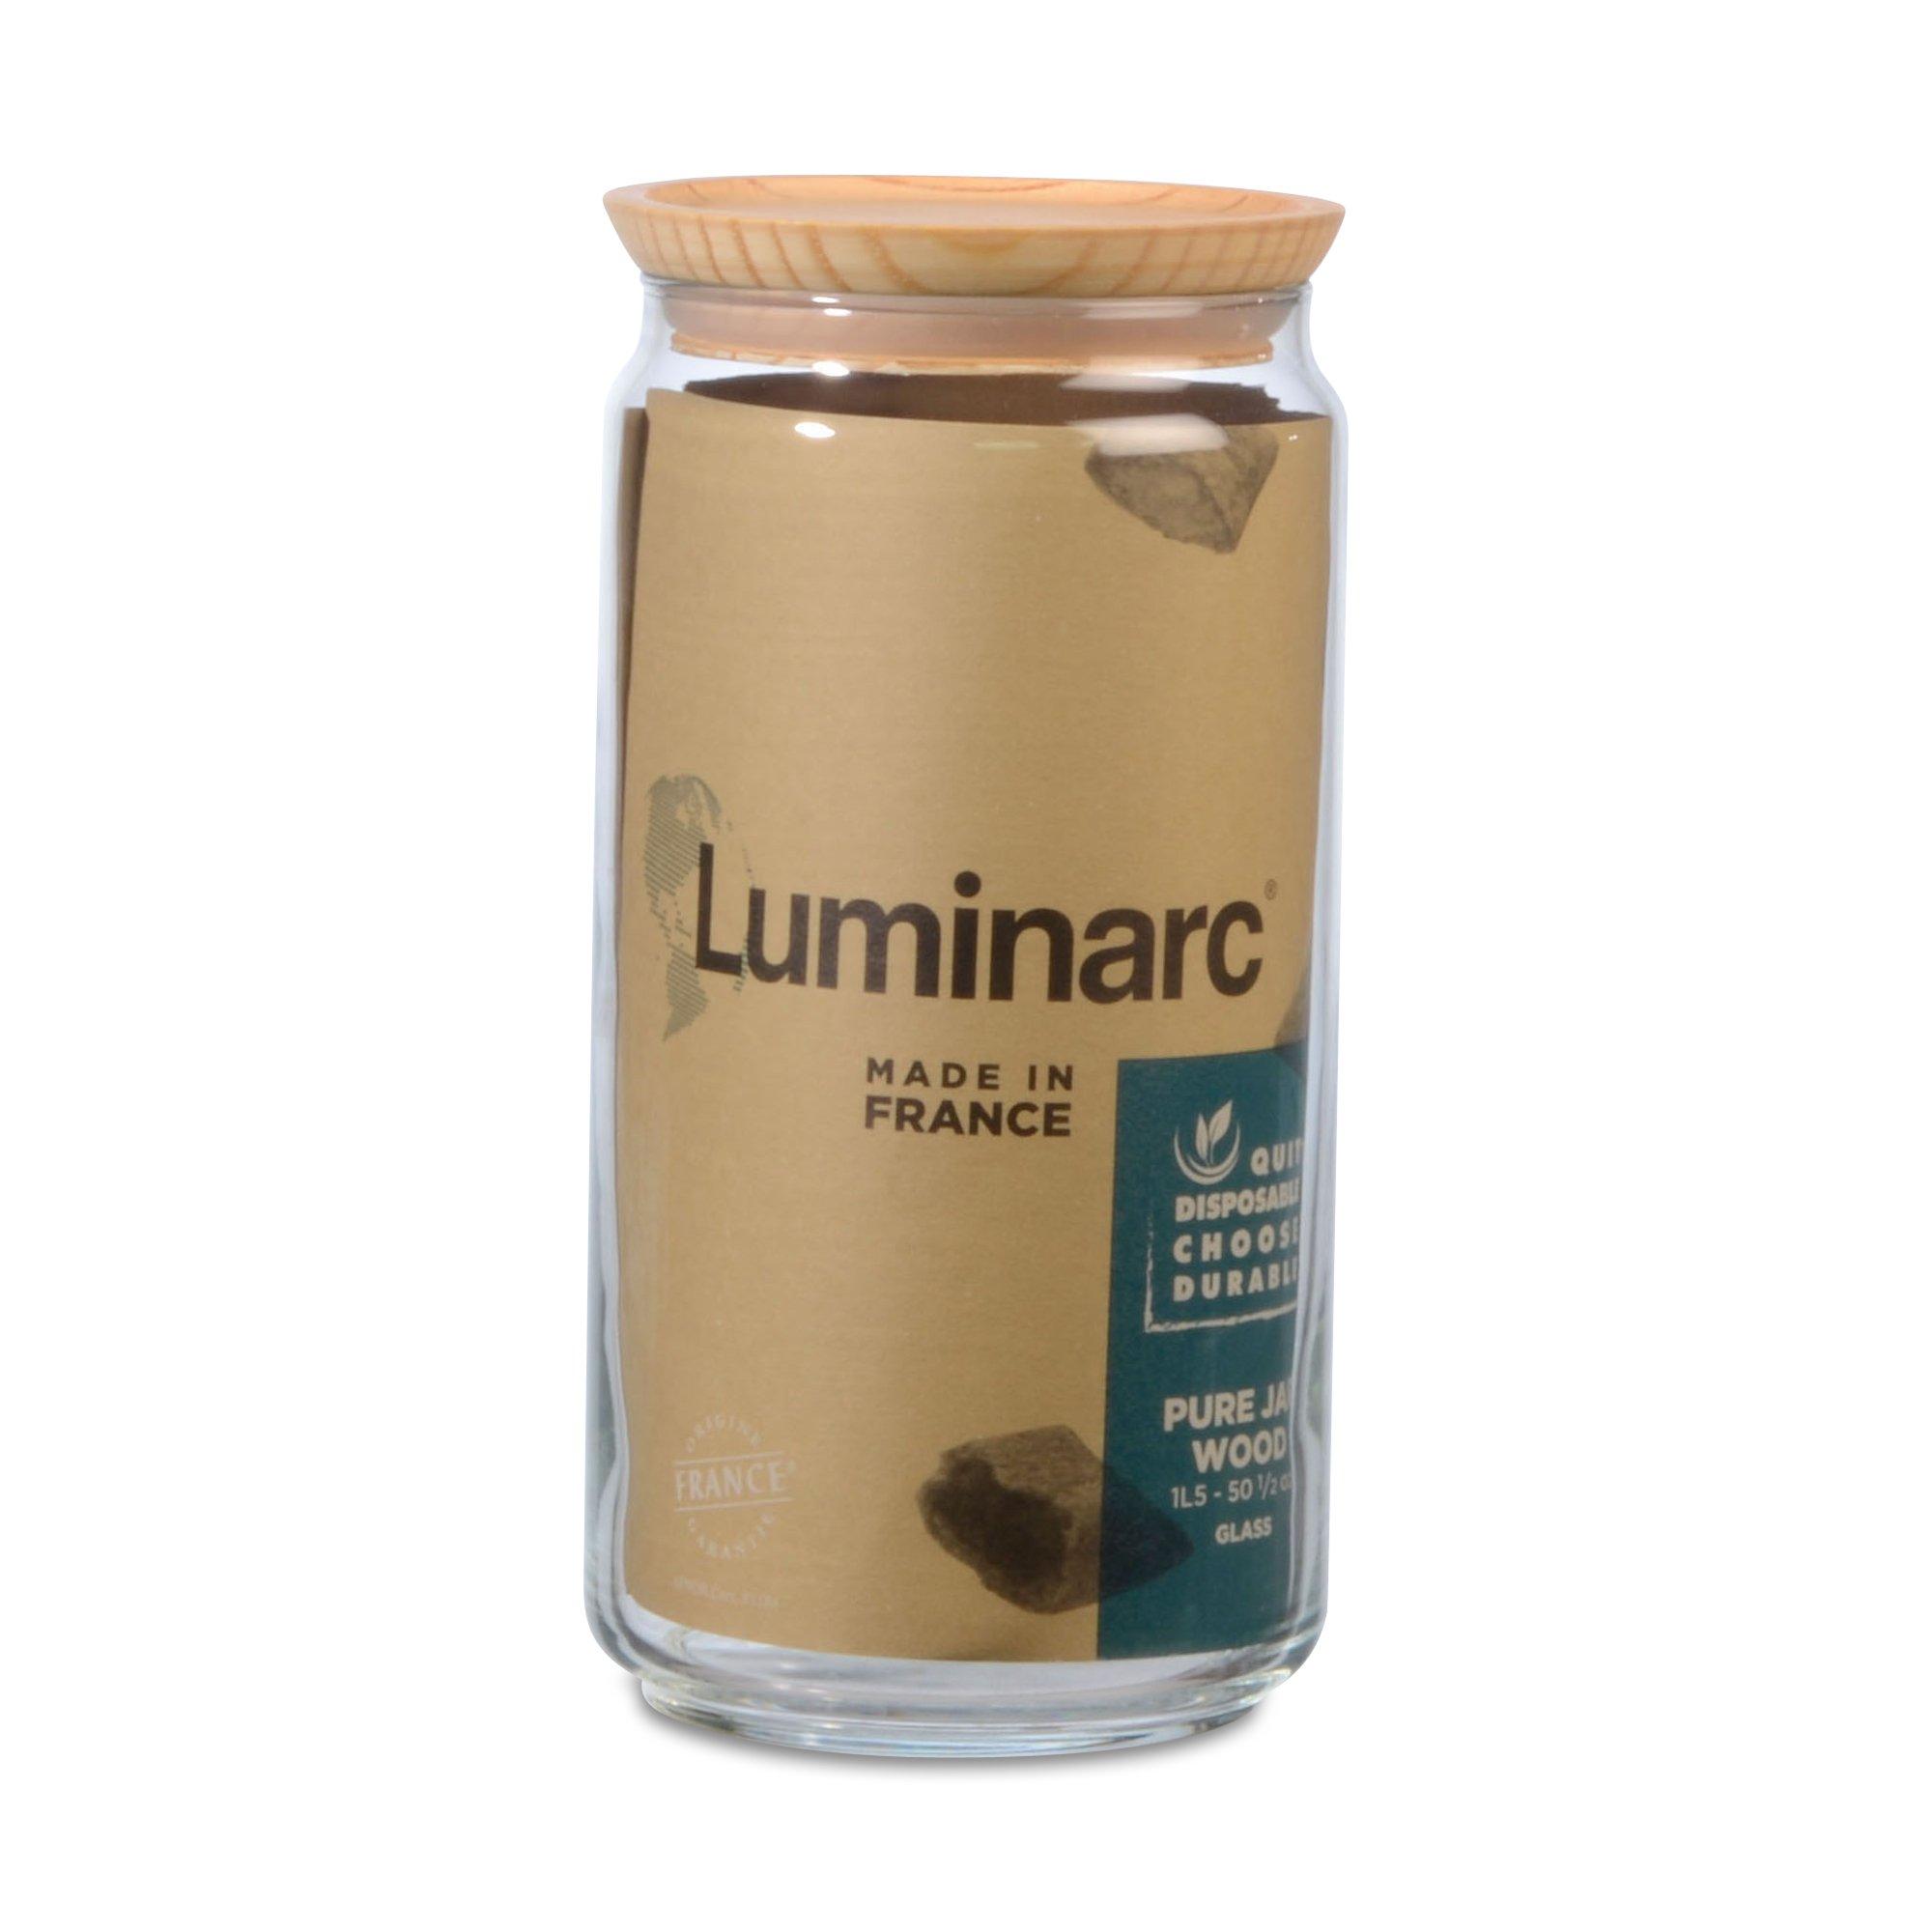 Image of Luminarc Dose Pure Jar Wood - 1.5L